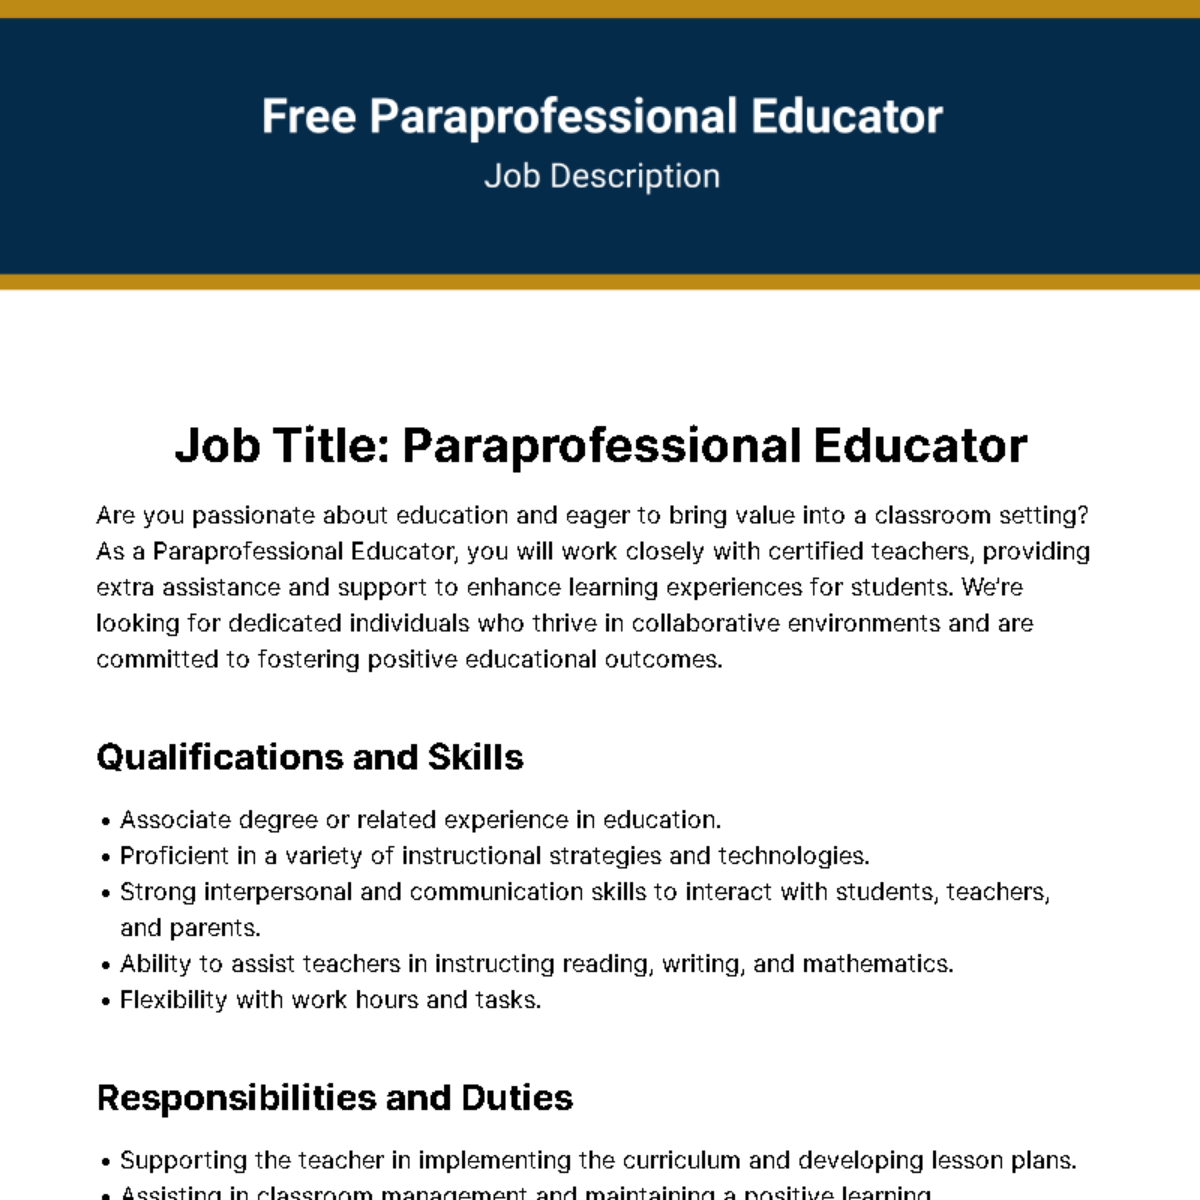 Free Paraprofessional Educator Job Description Template